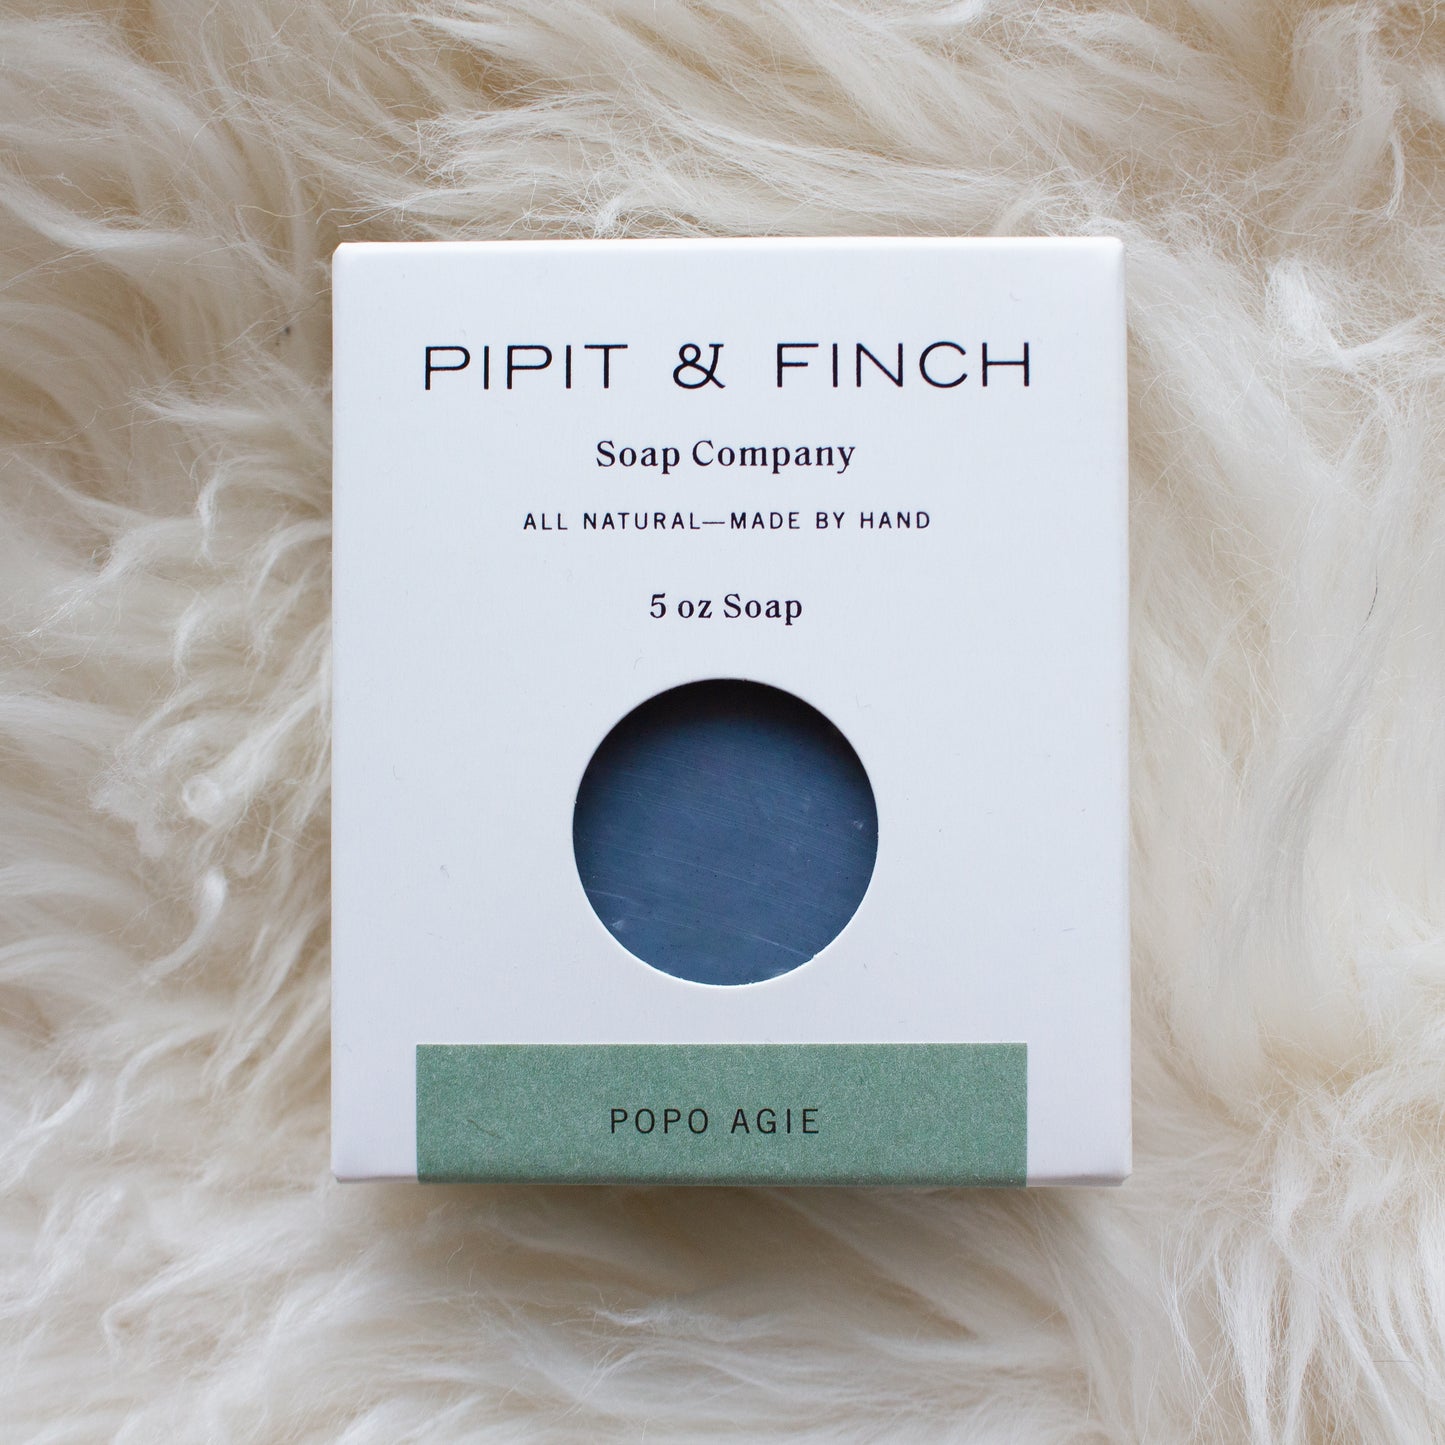 Pipit & Finch Popo Agie Olive Oil Soap